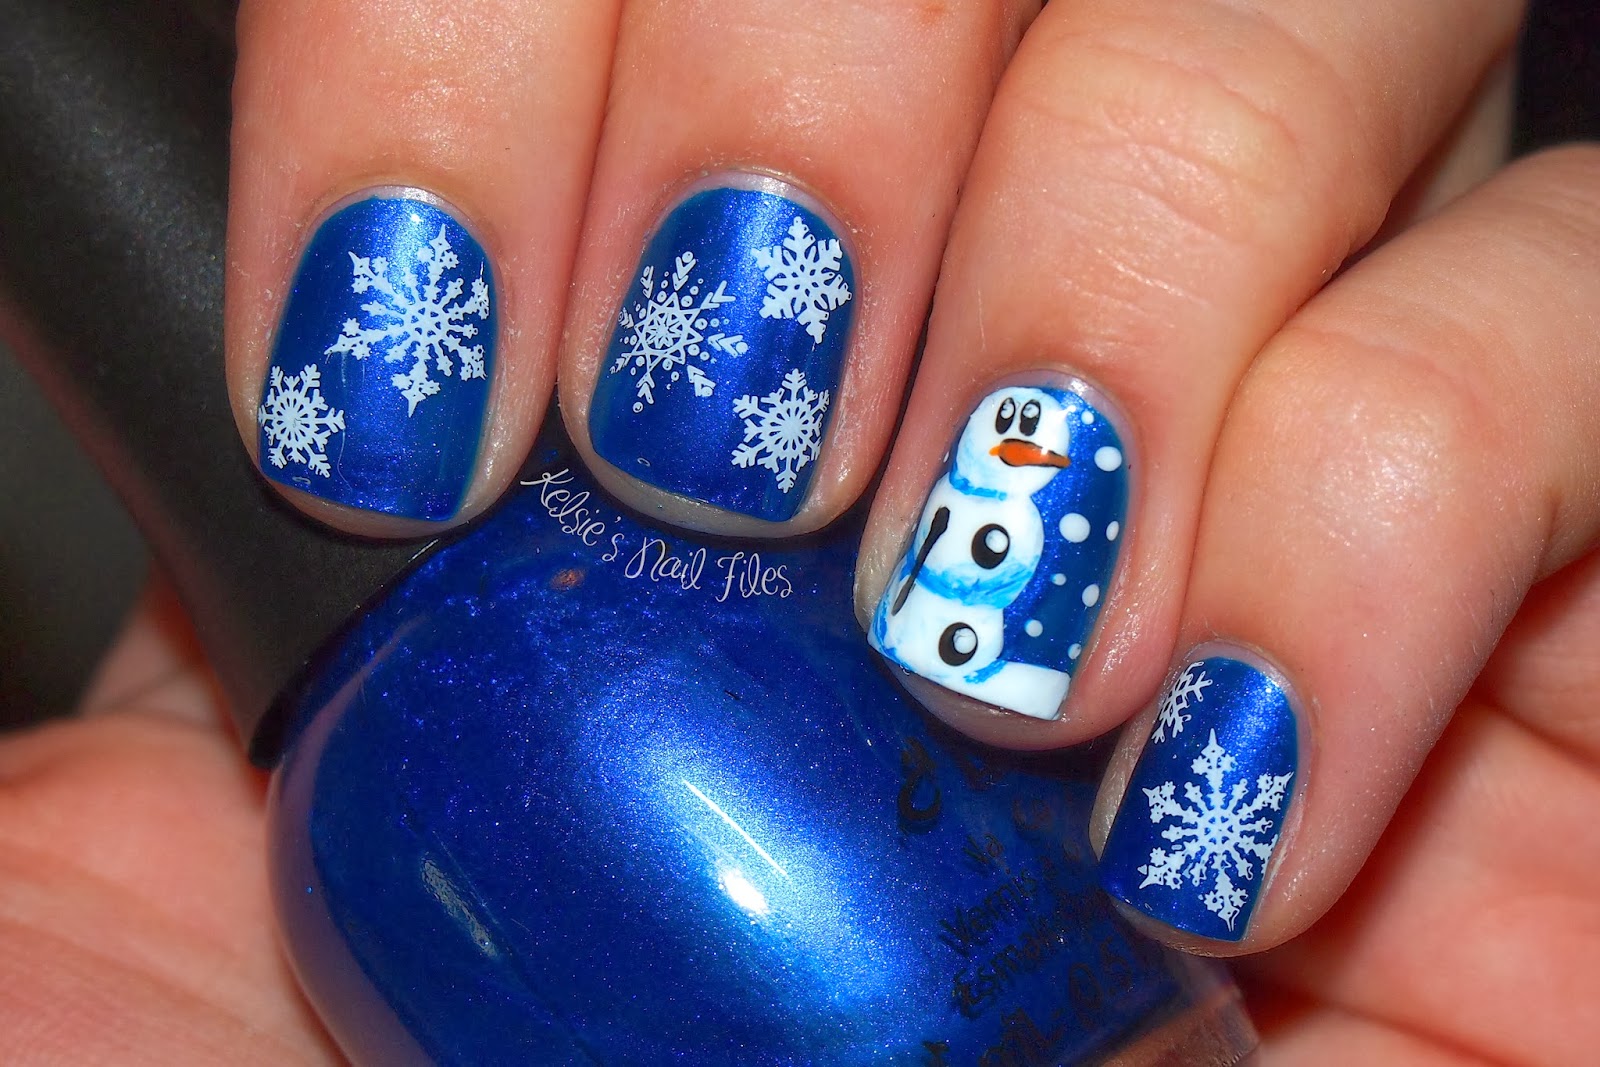 2. Winter Nail Art Designs - wide 5